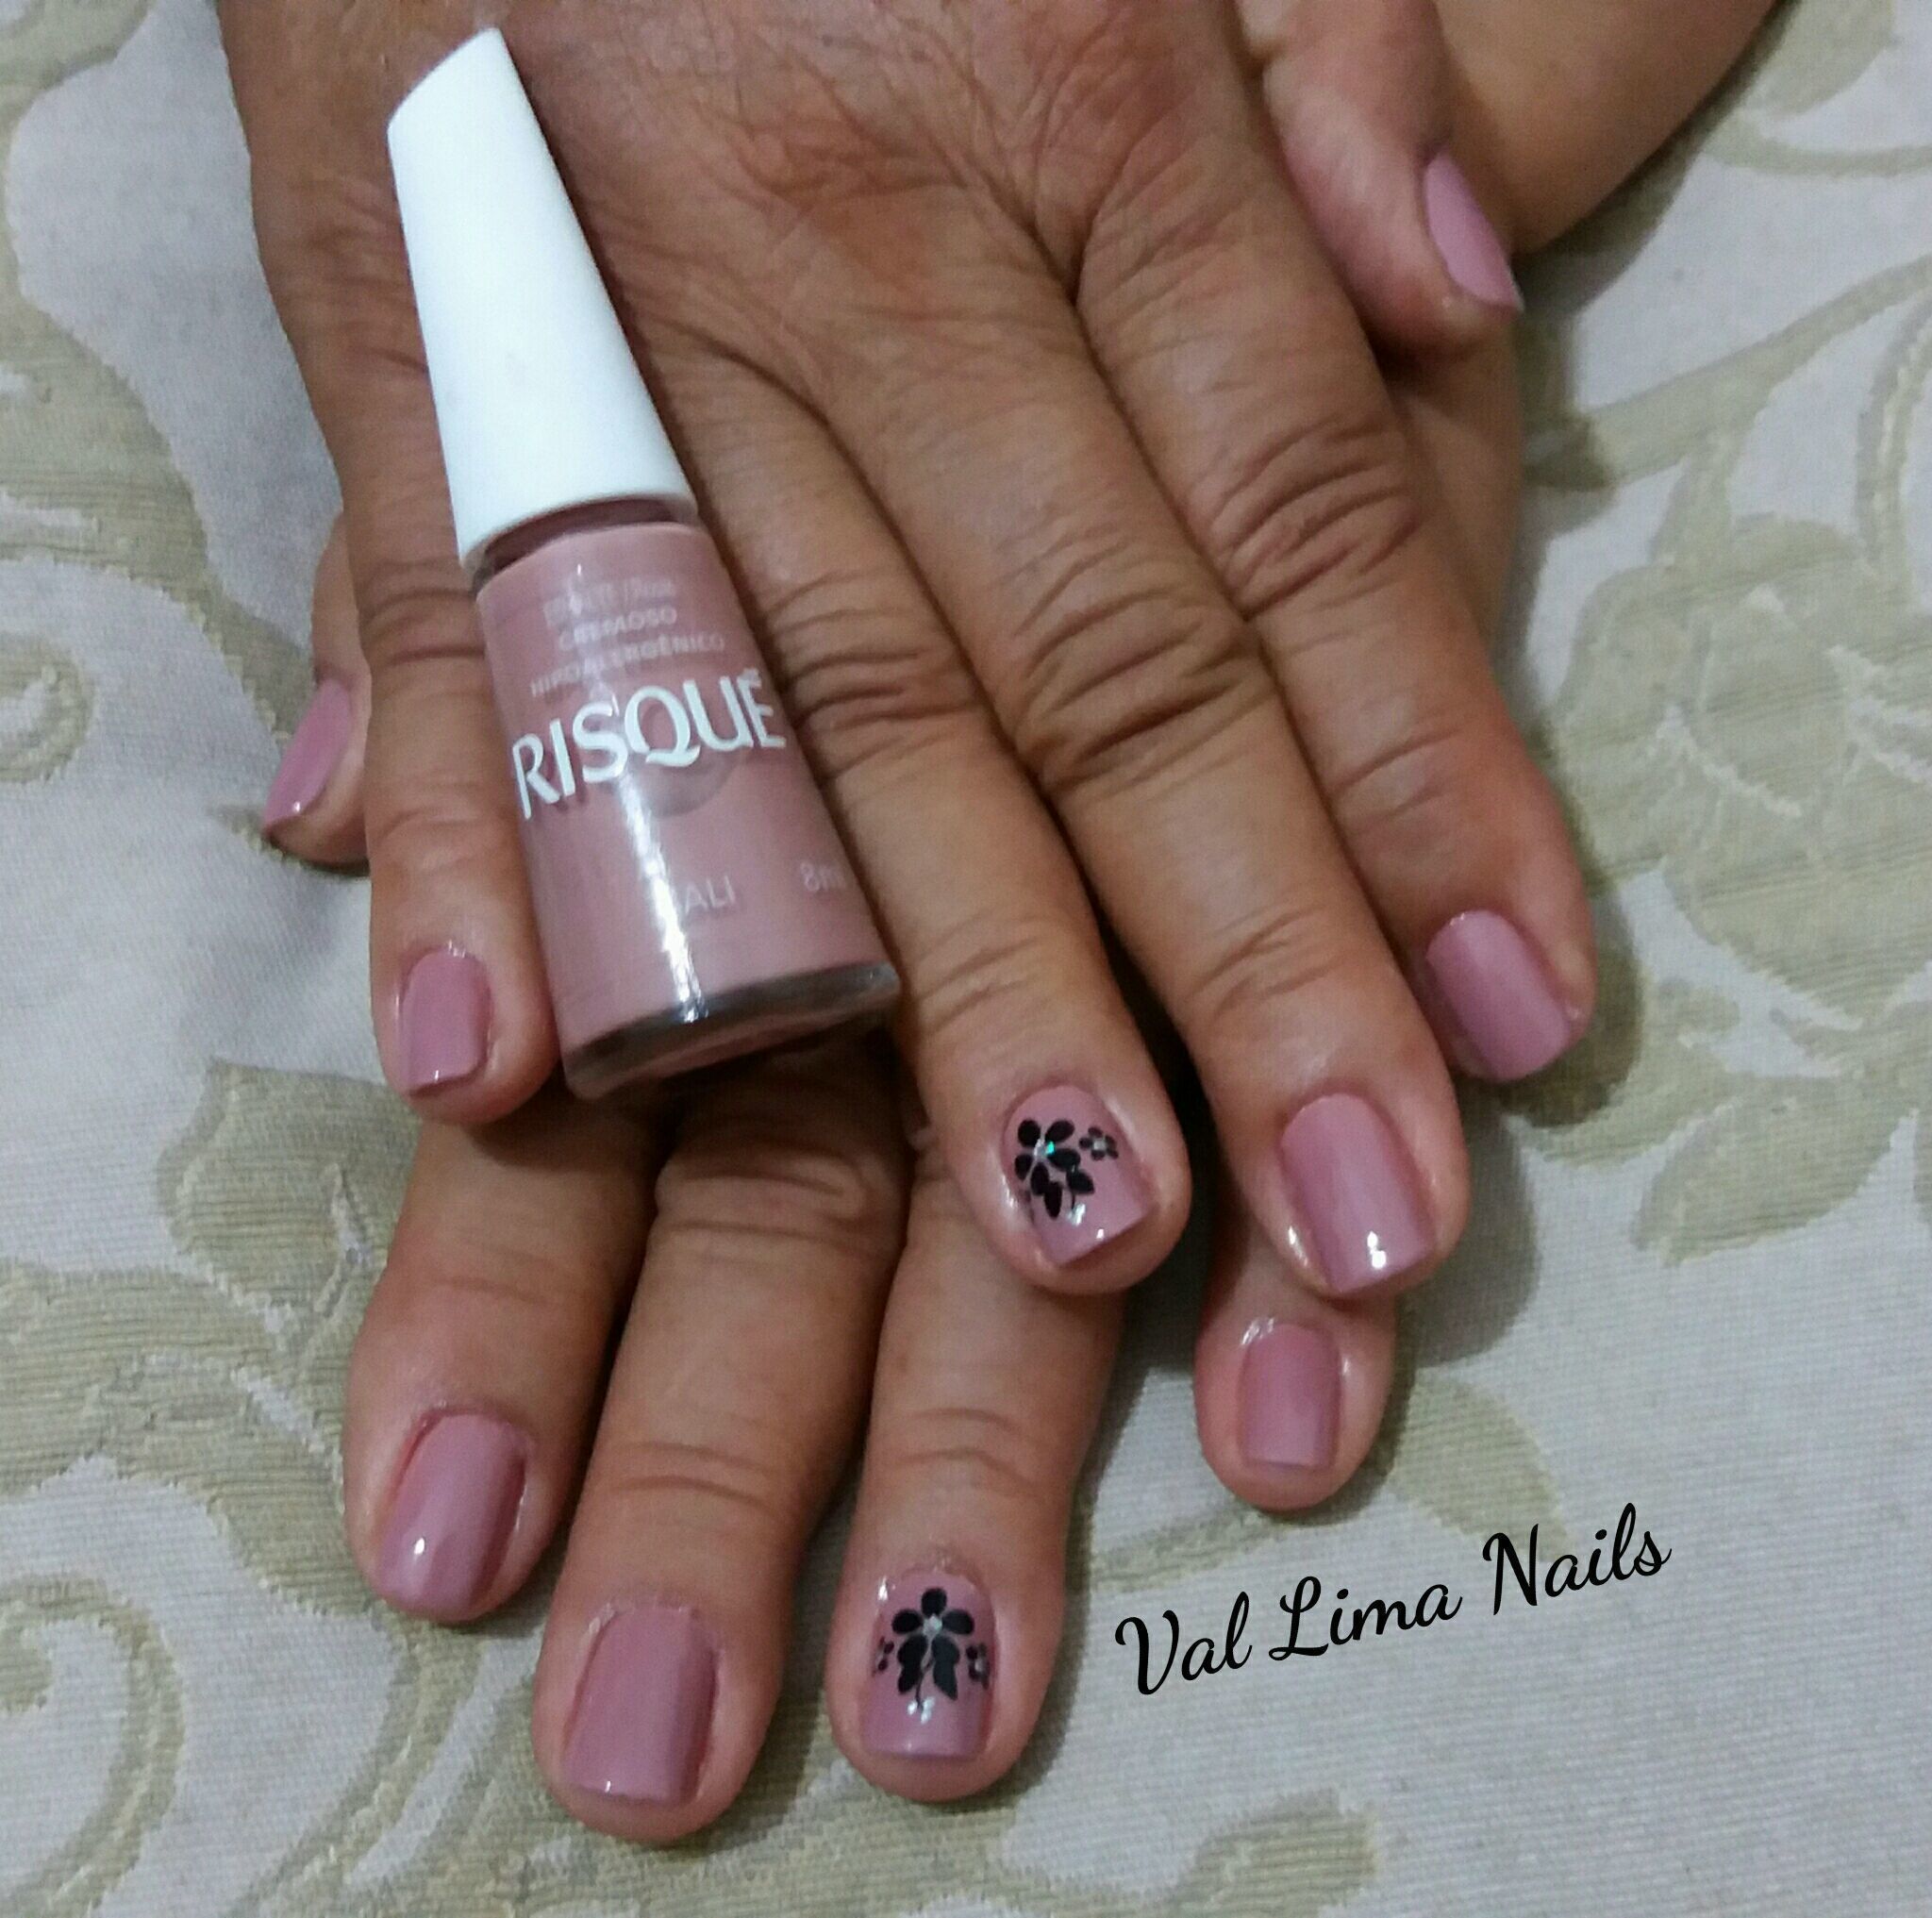 Esmaltacao #risque bali com adesivo floral 💅 unha manicure e pedicure